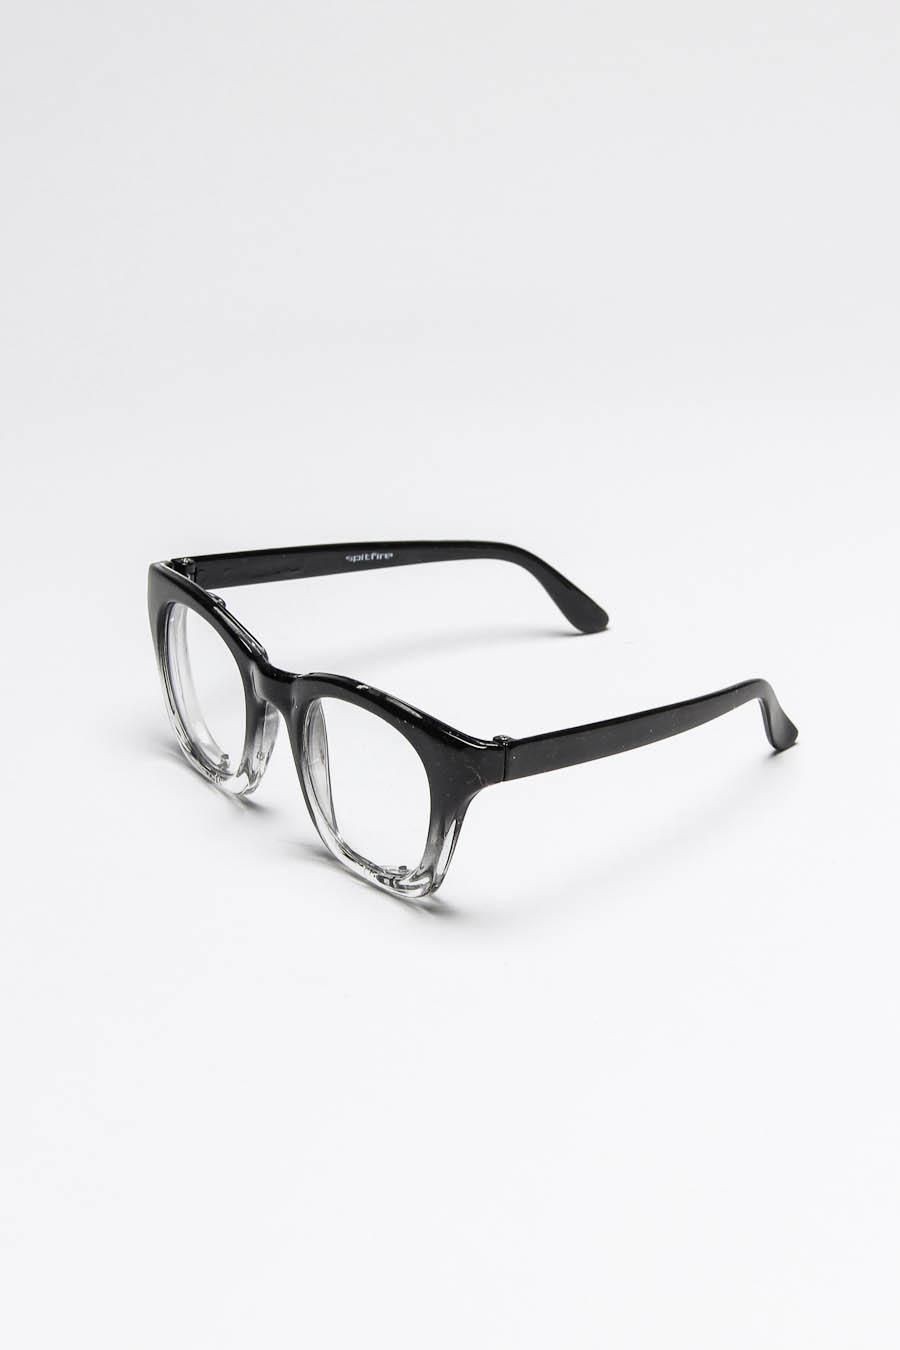 Black and clear frame glasses: Nerdy Glasses  